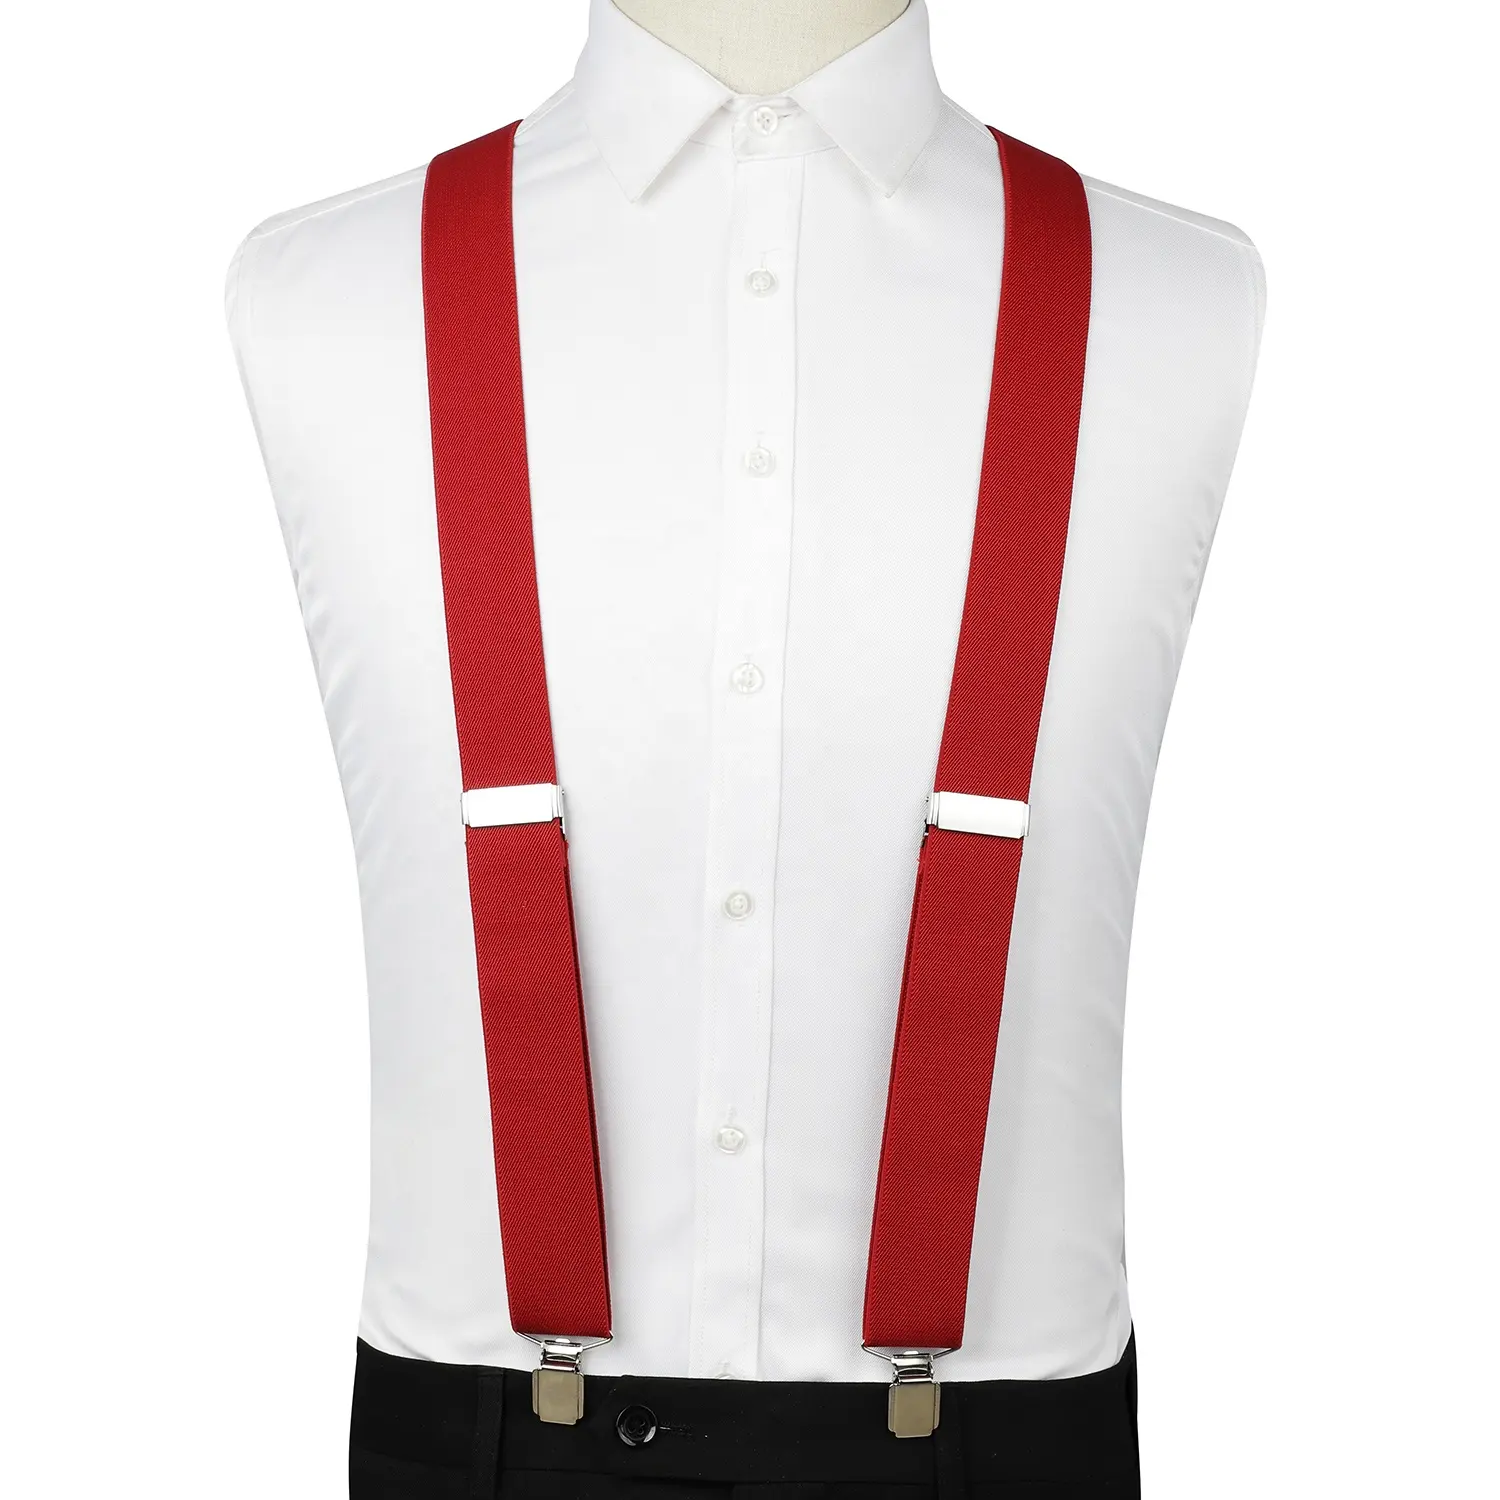 Suspenders for Men Adjustable Size Elastic Y Shape Women Mens Suspenders Heavy Duty Clips